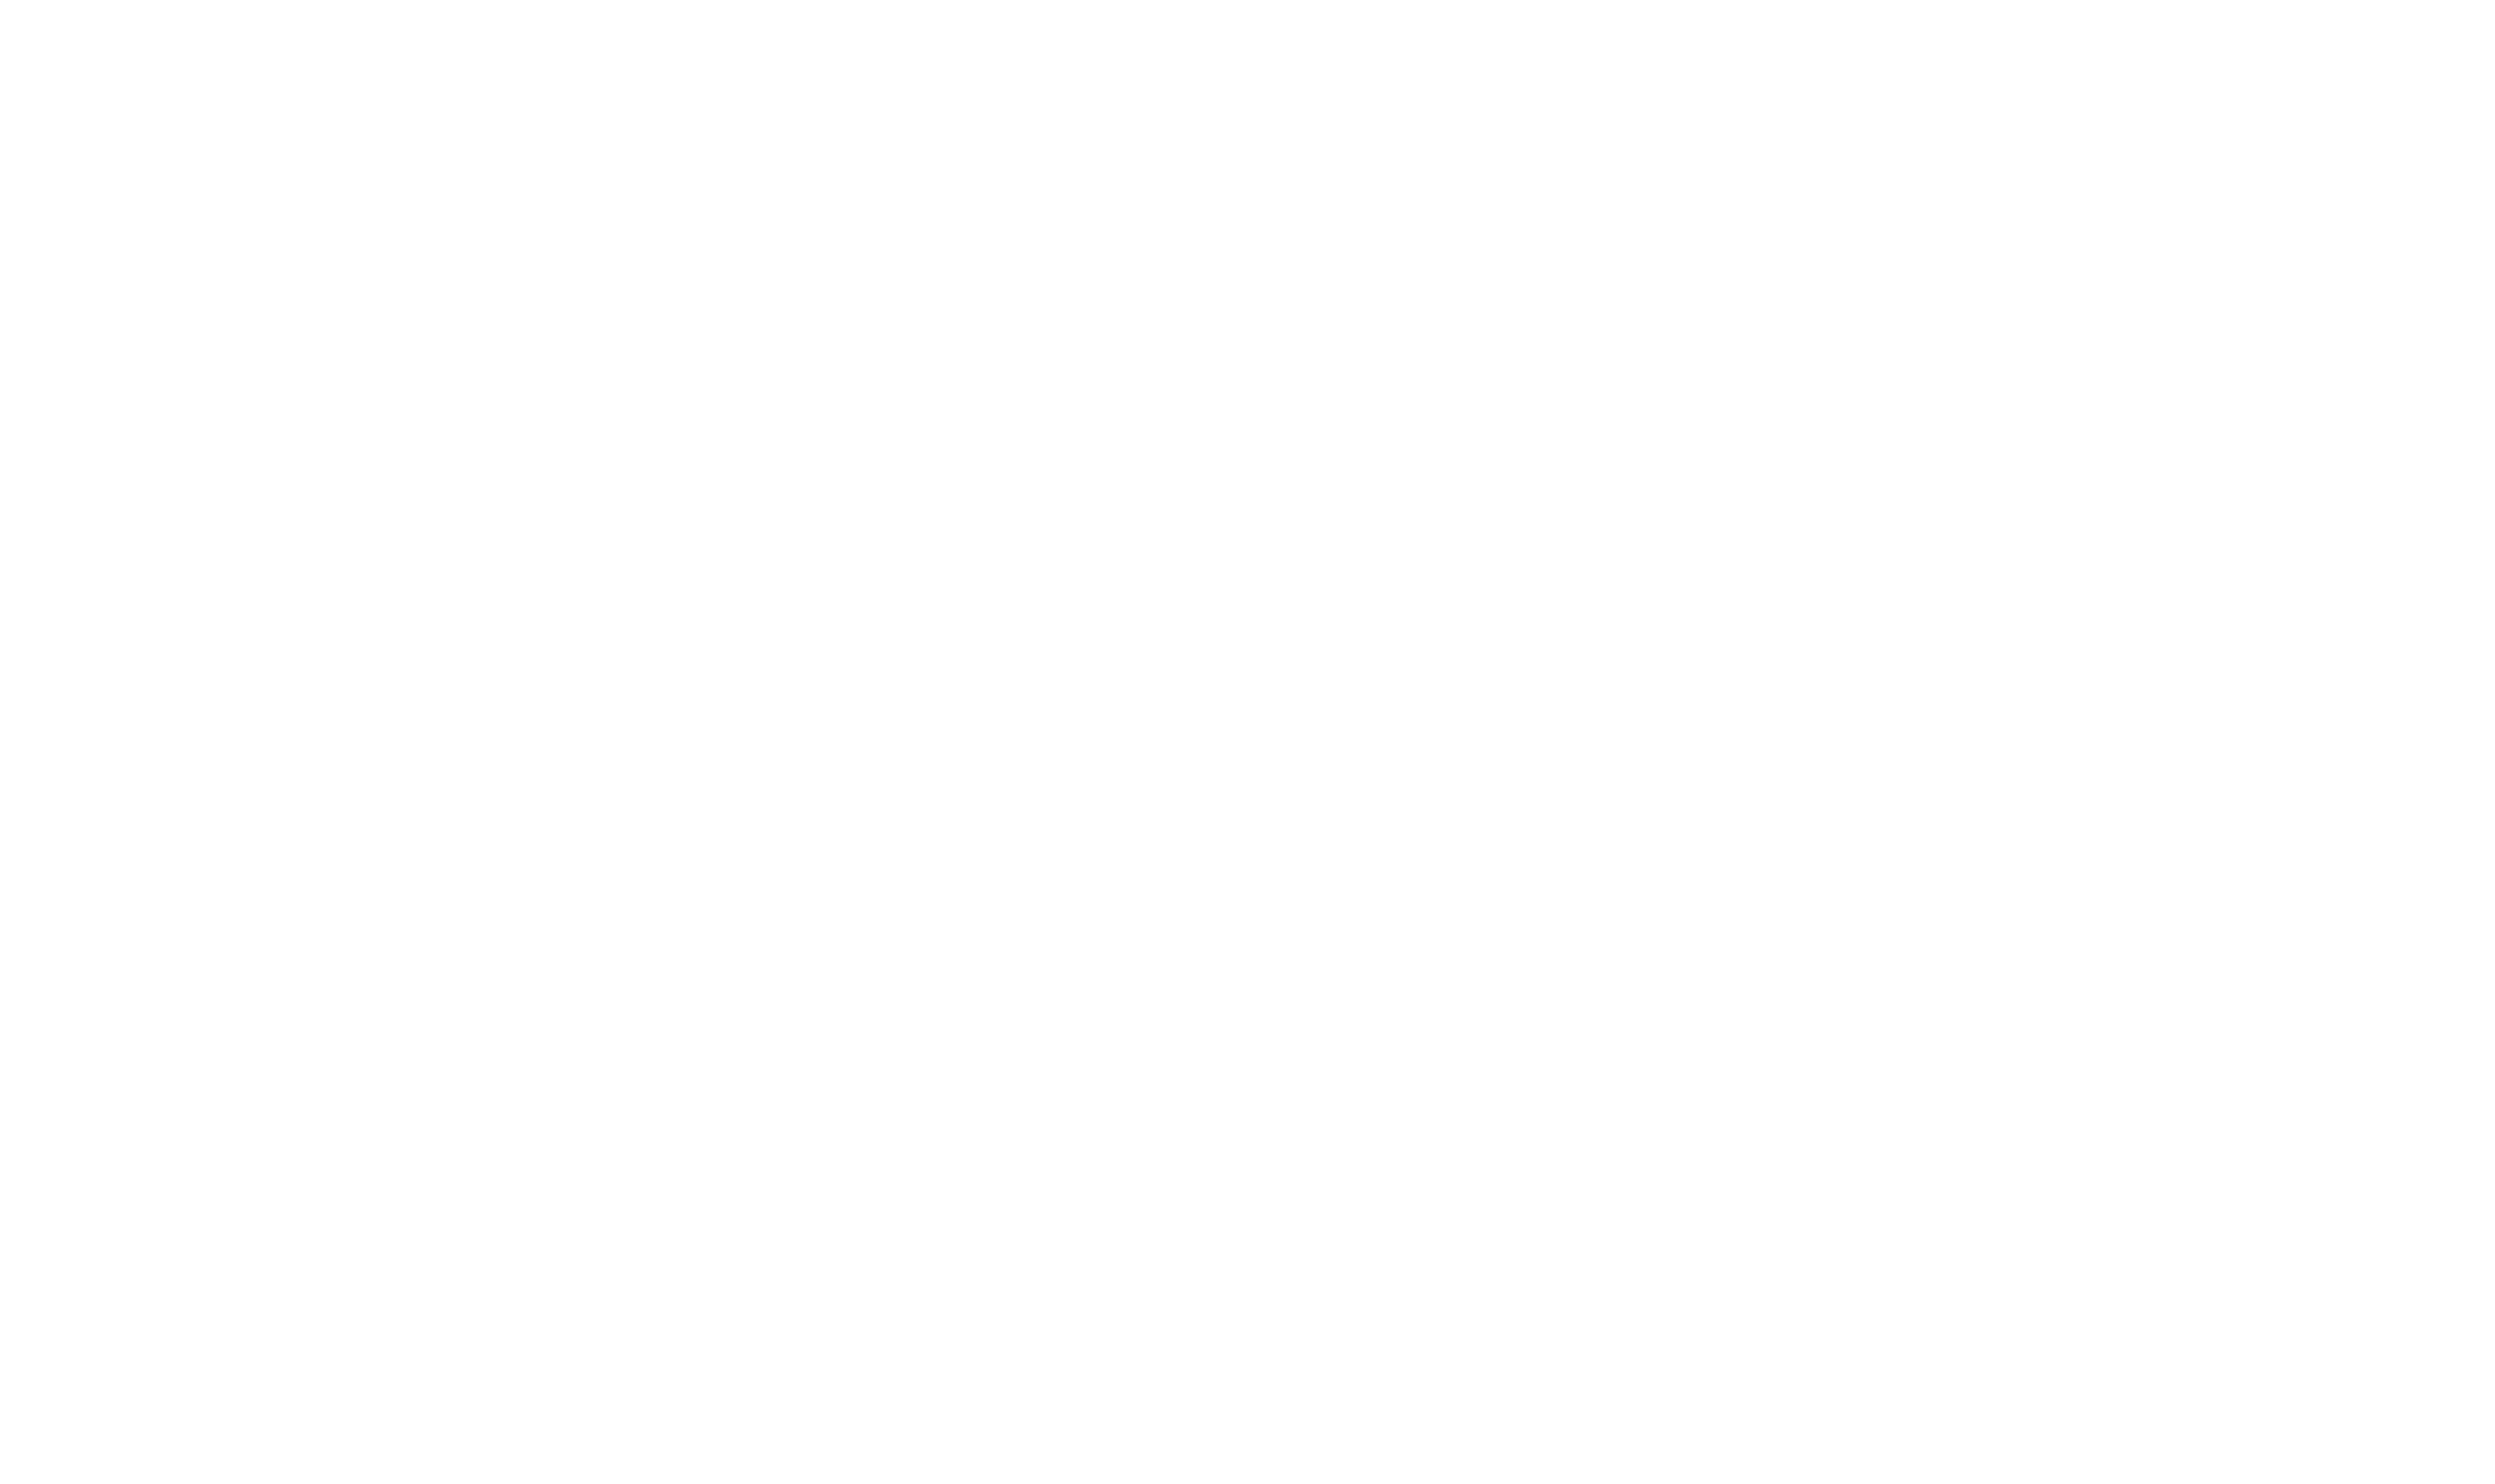 PPDS